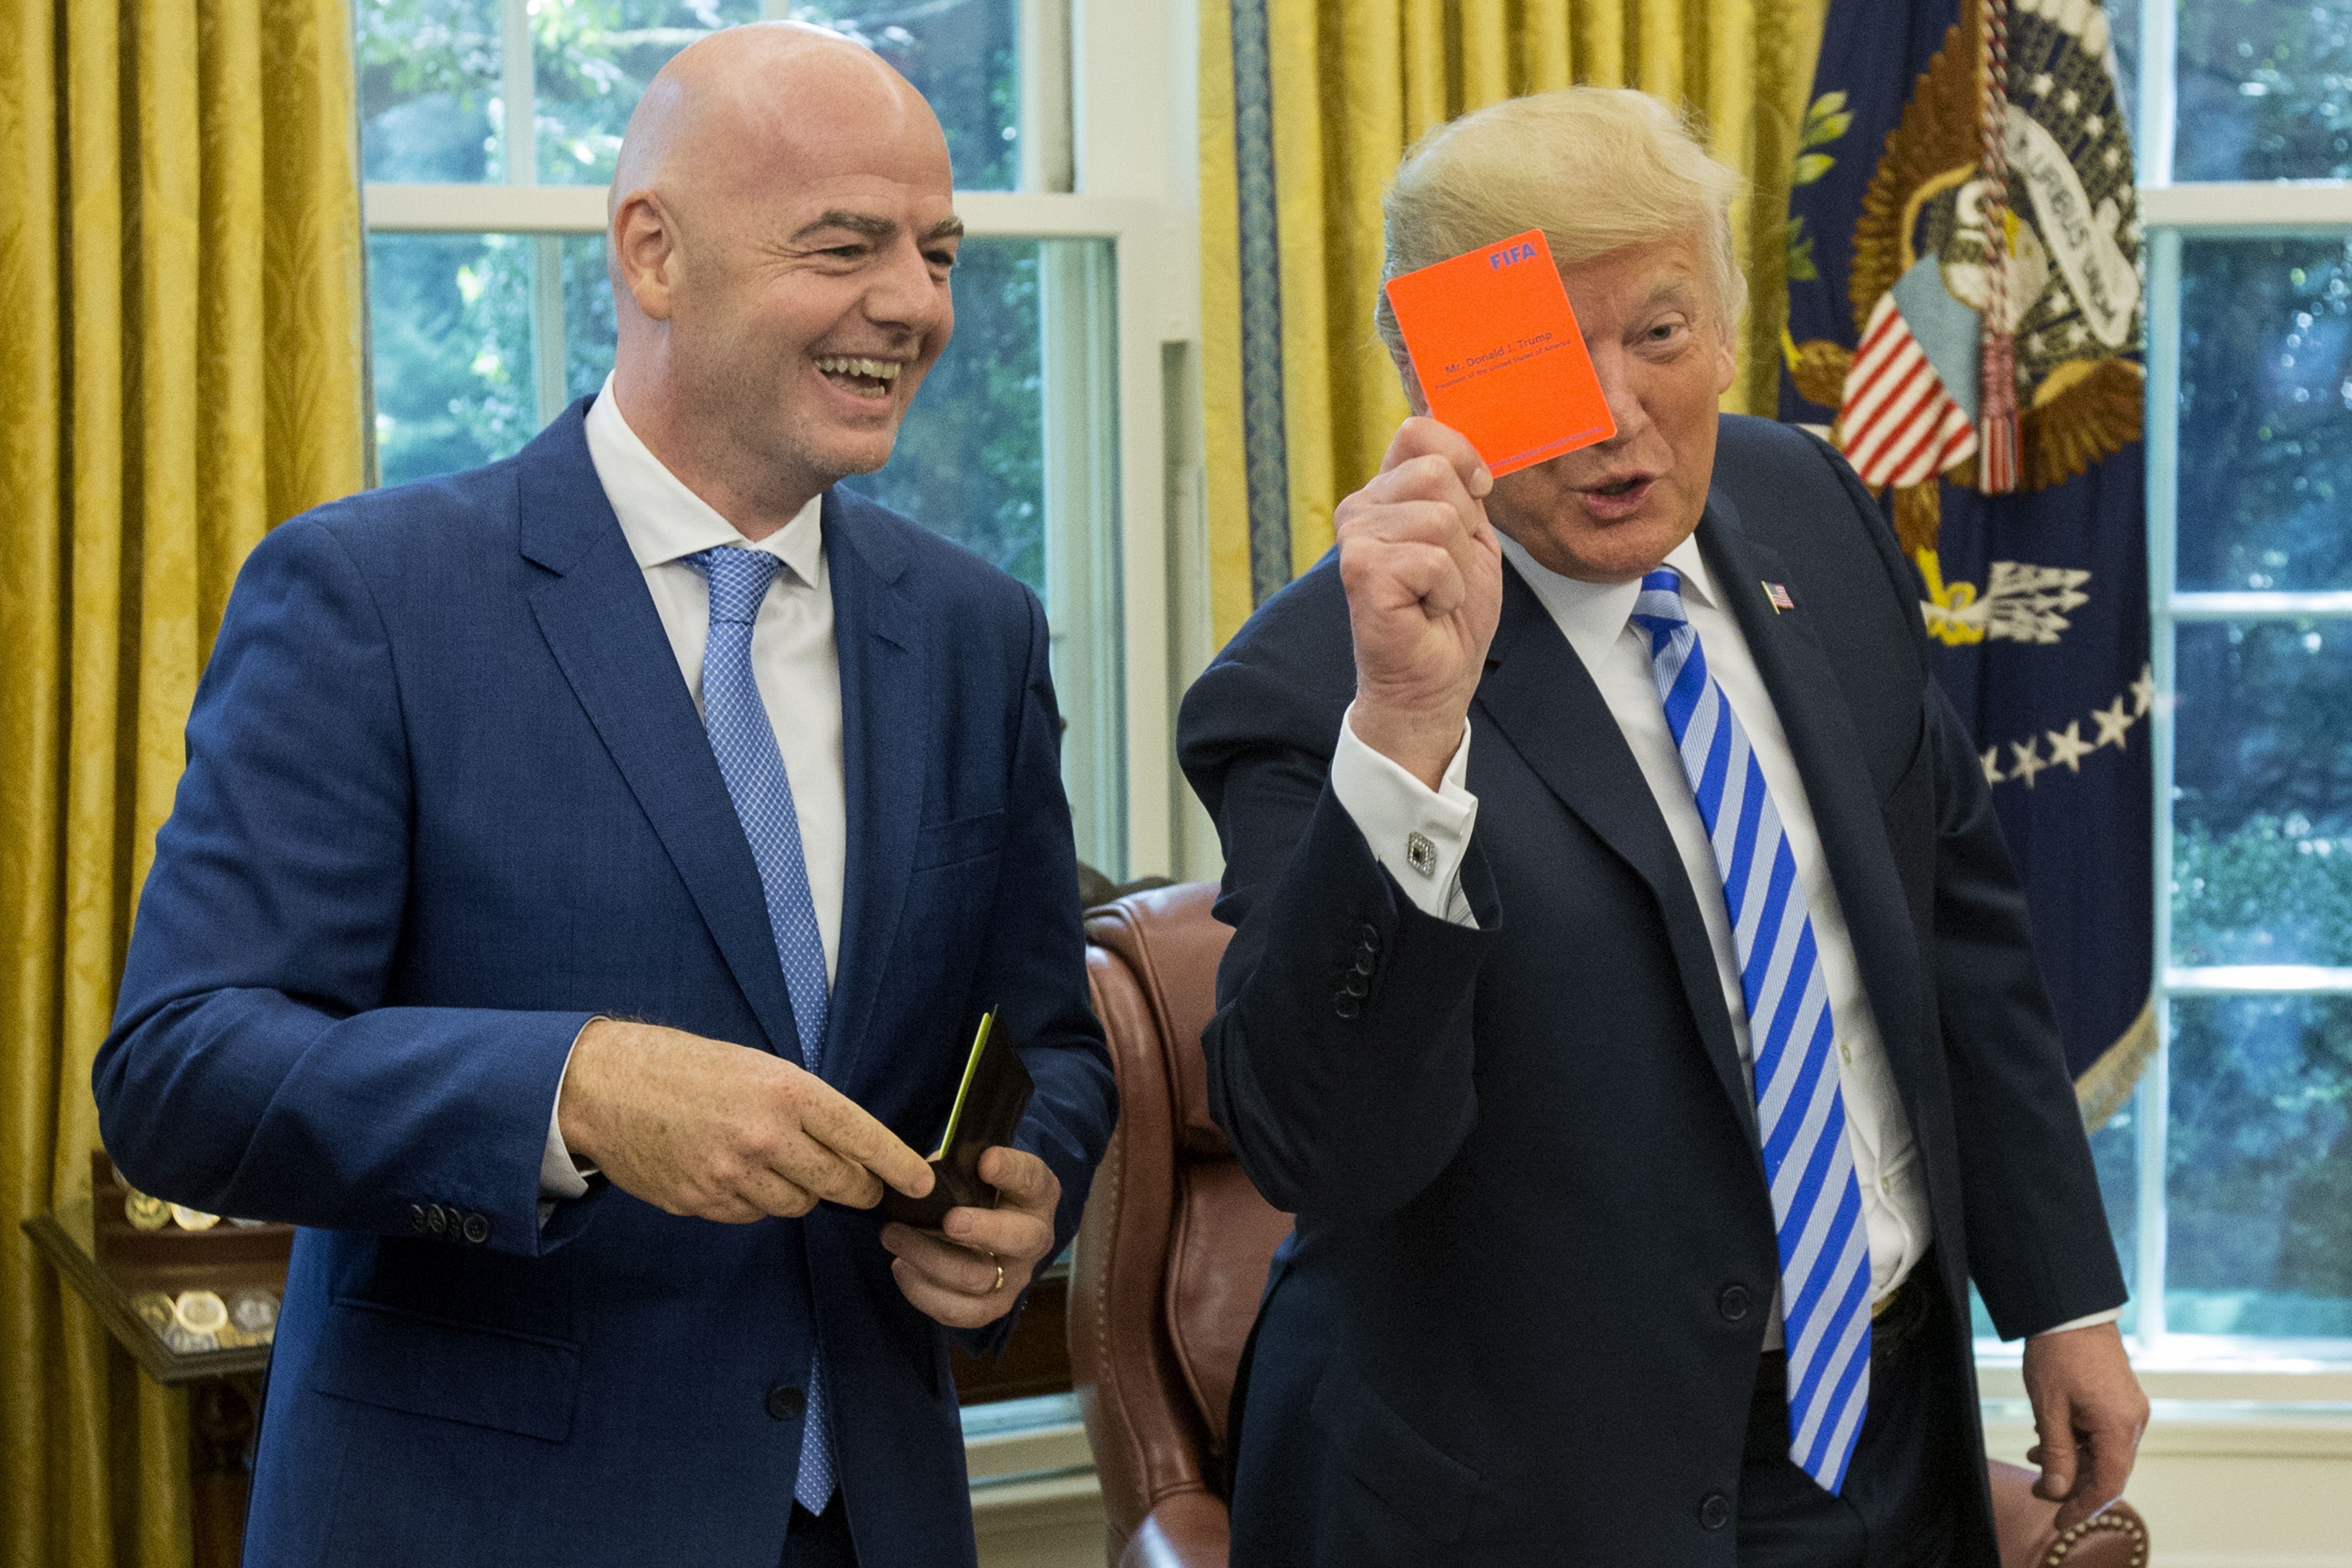 Trump descubre la tarjeta roja... y se la enseña a la prensa